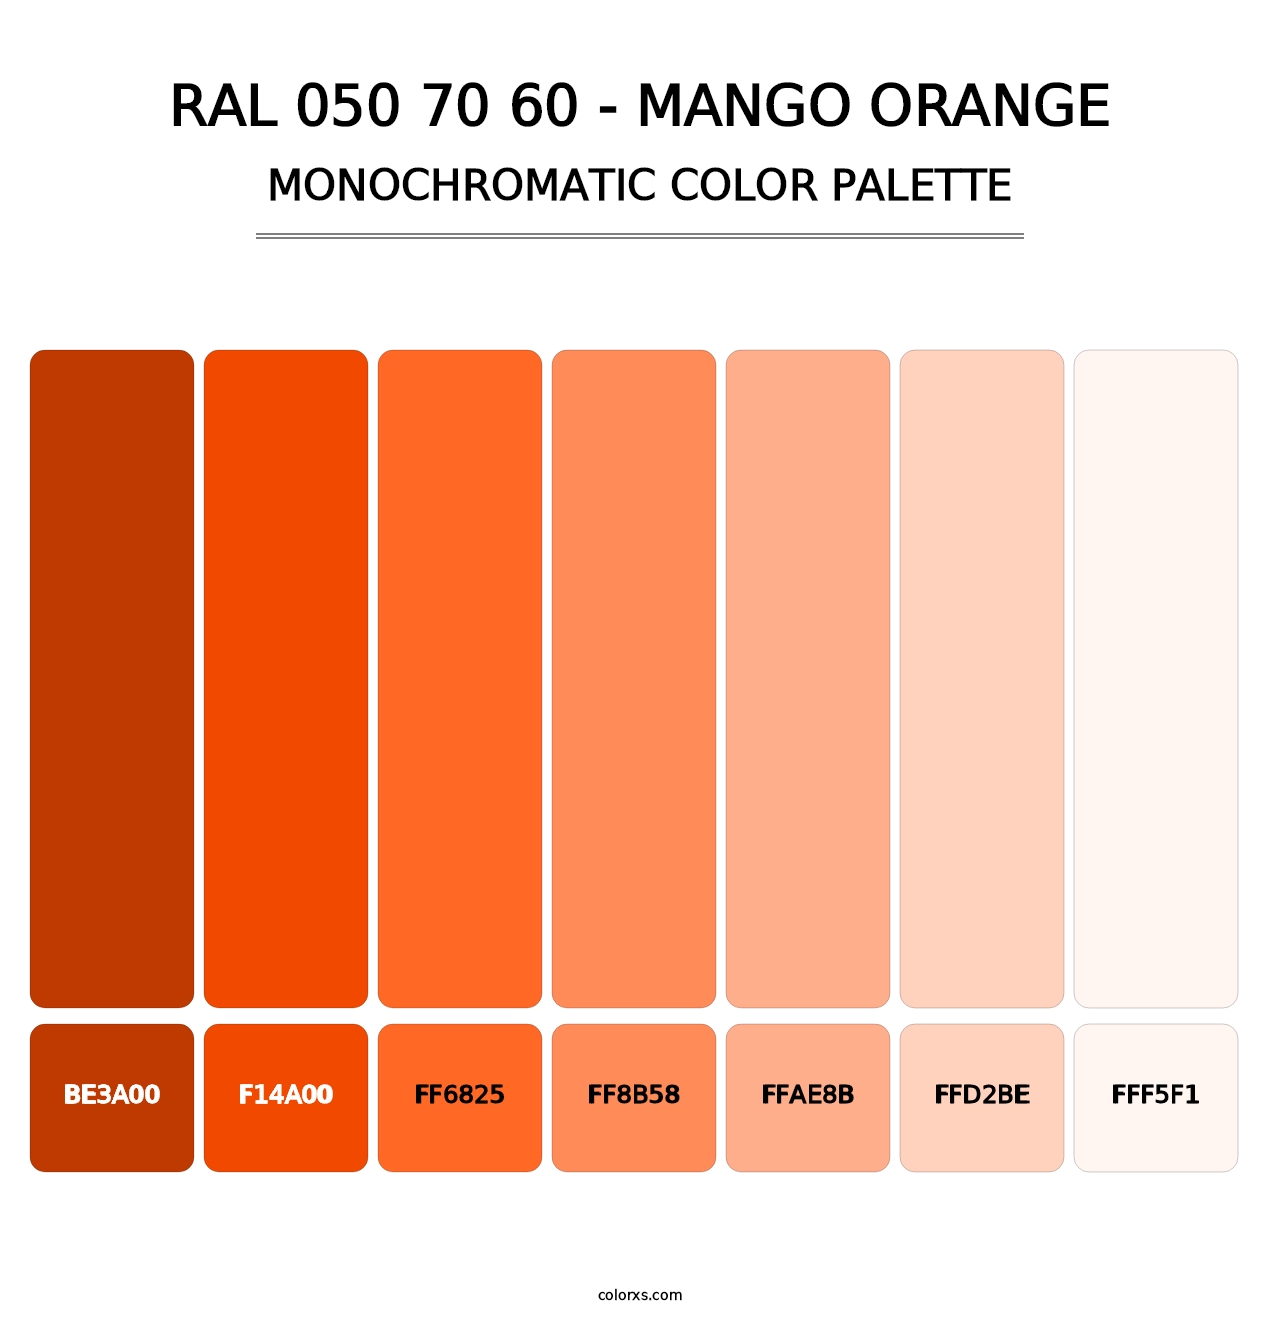 RAL 050 70 60 - Mango Orange - Monochromatic Color Palette